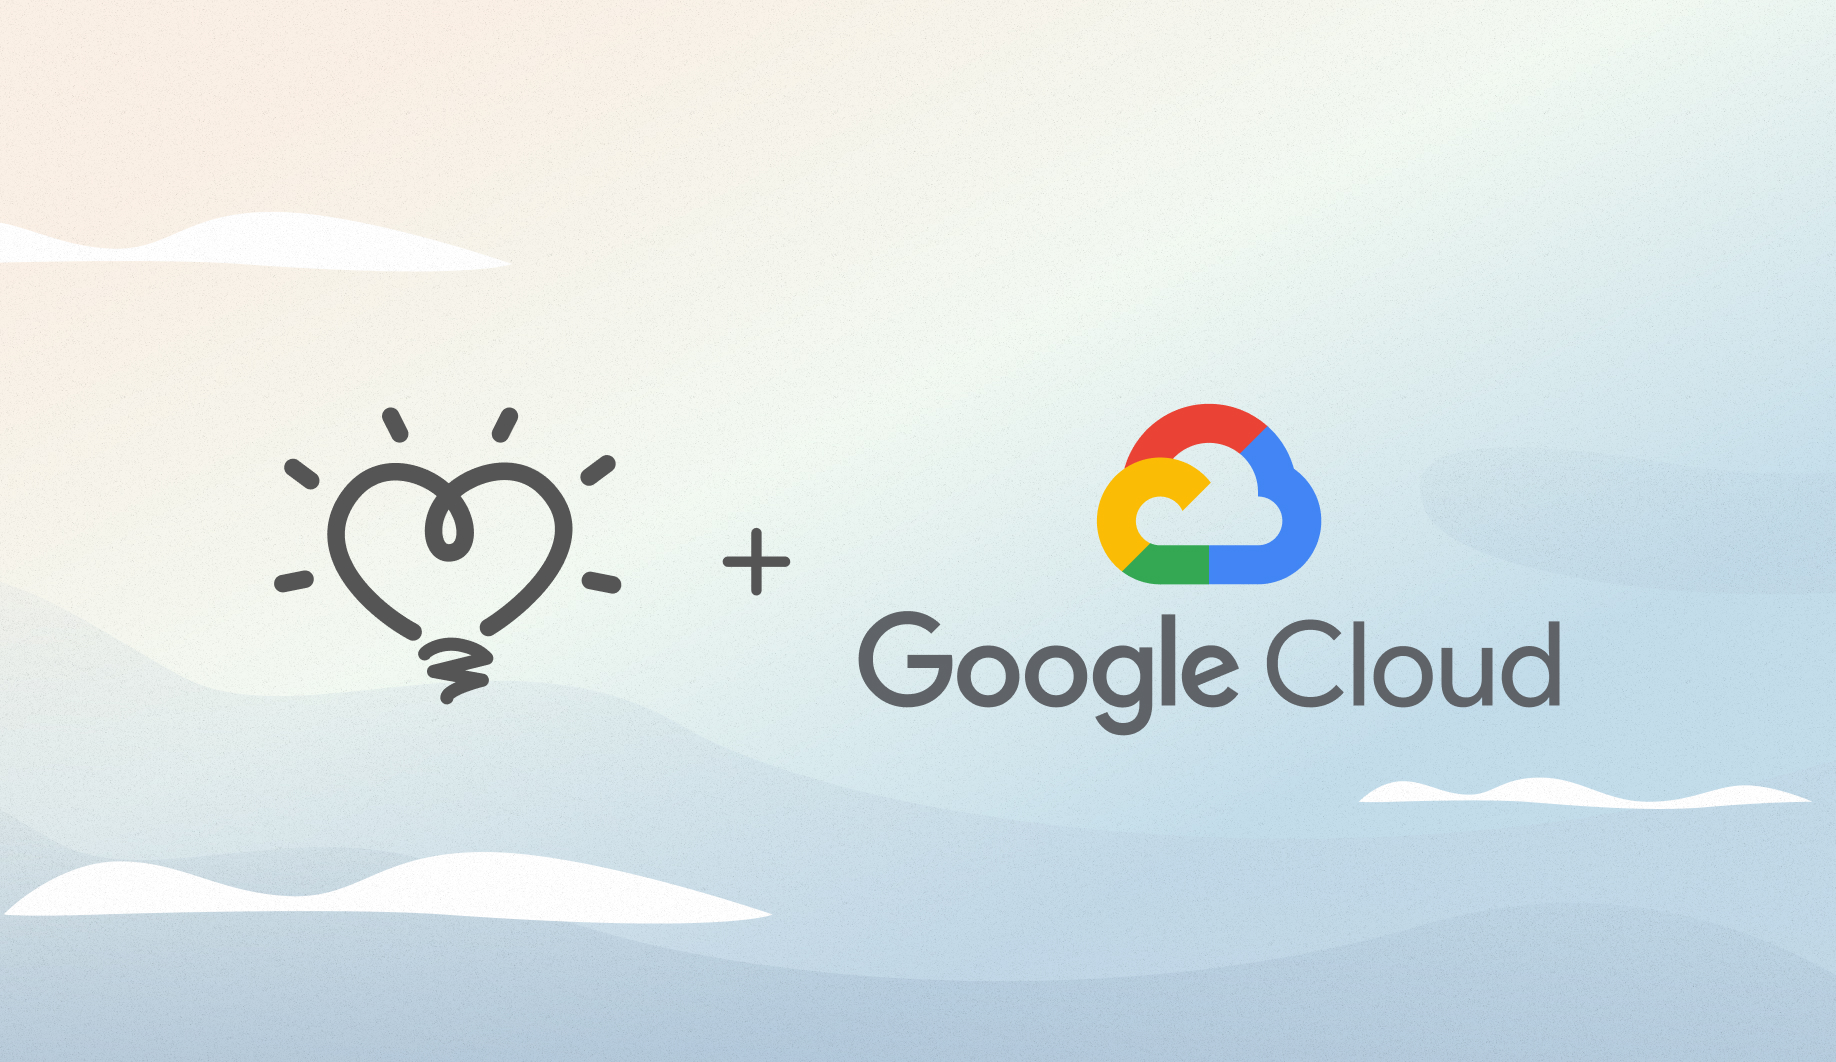 Google Cloud Features Monalee as a Climate Tech Success Story